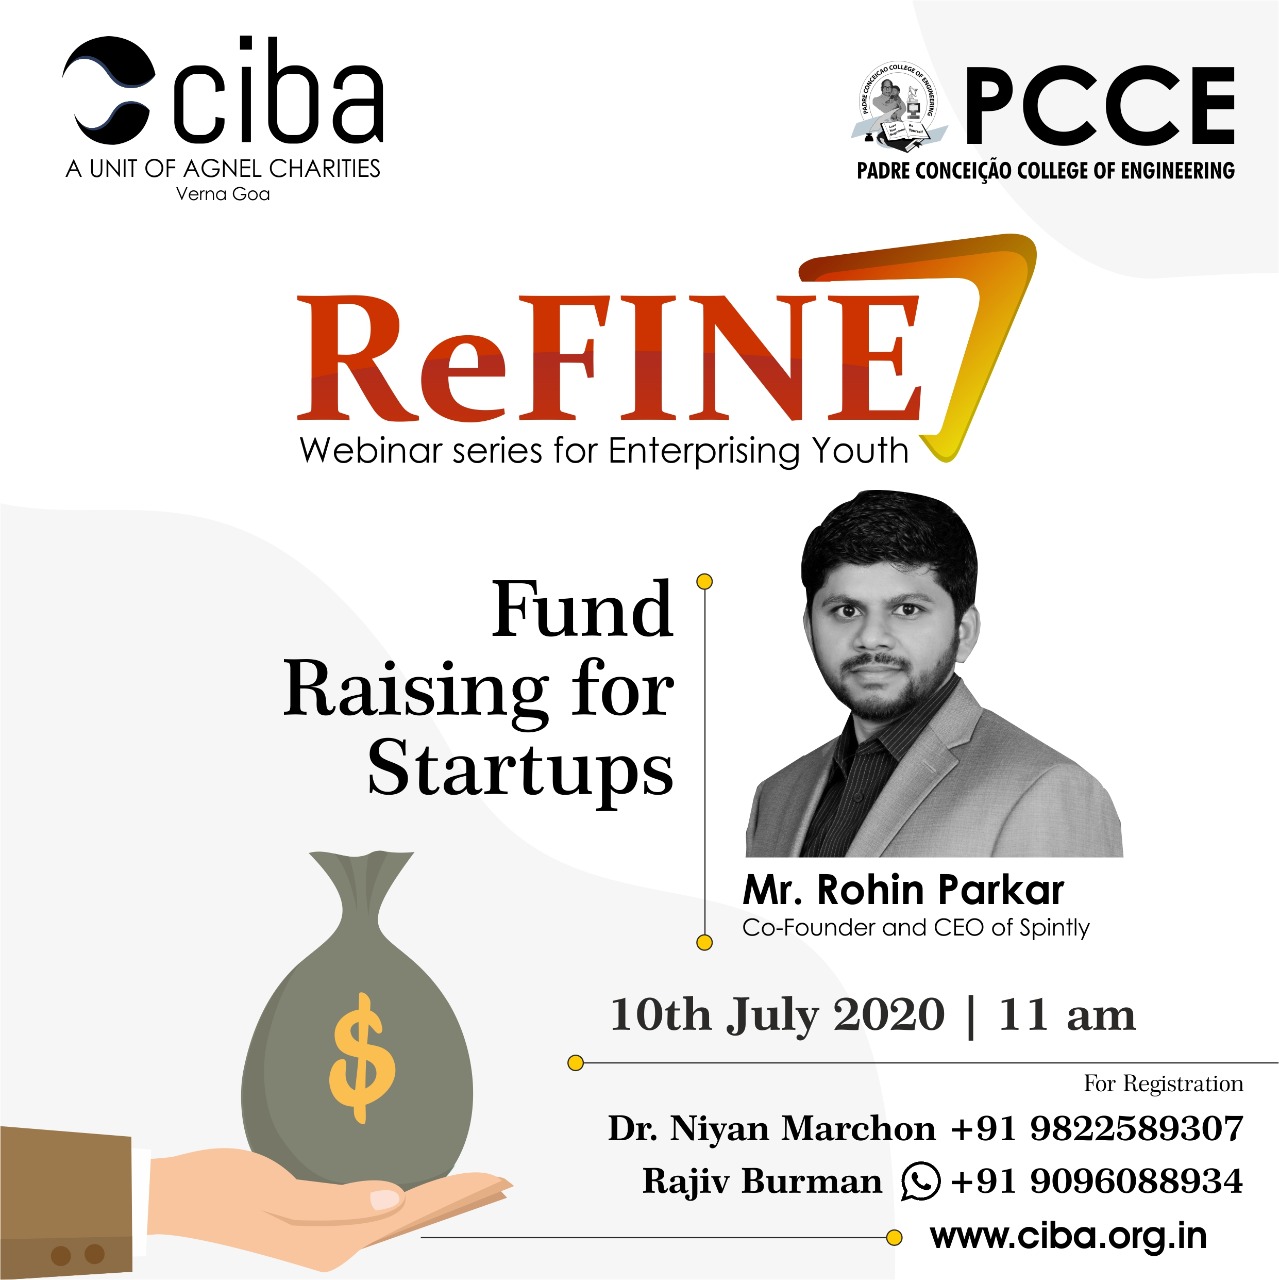 ciba-ReFINE - Fund Raising for Startups